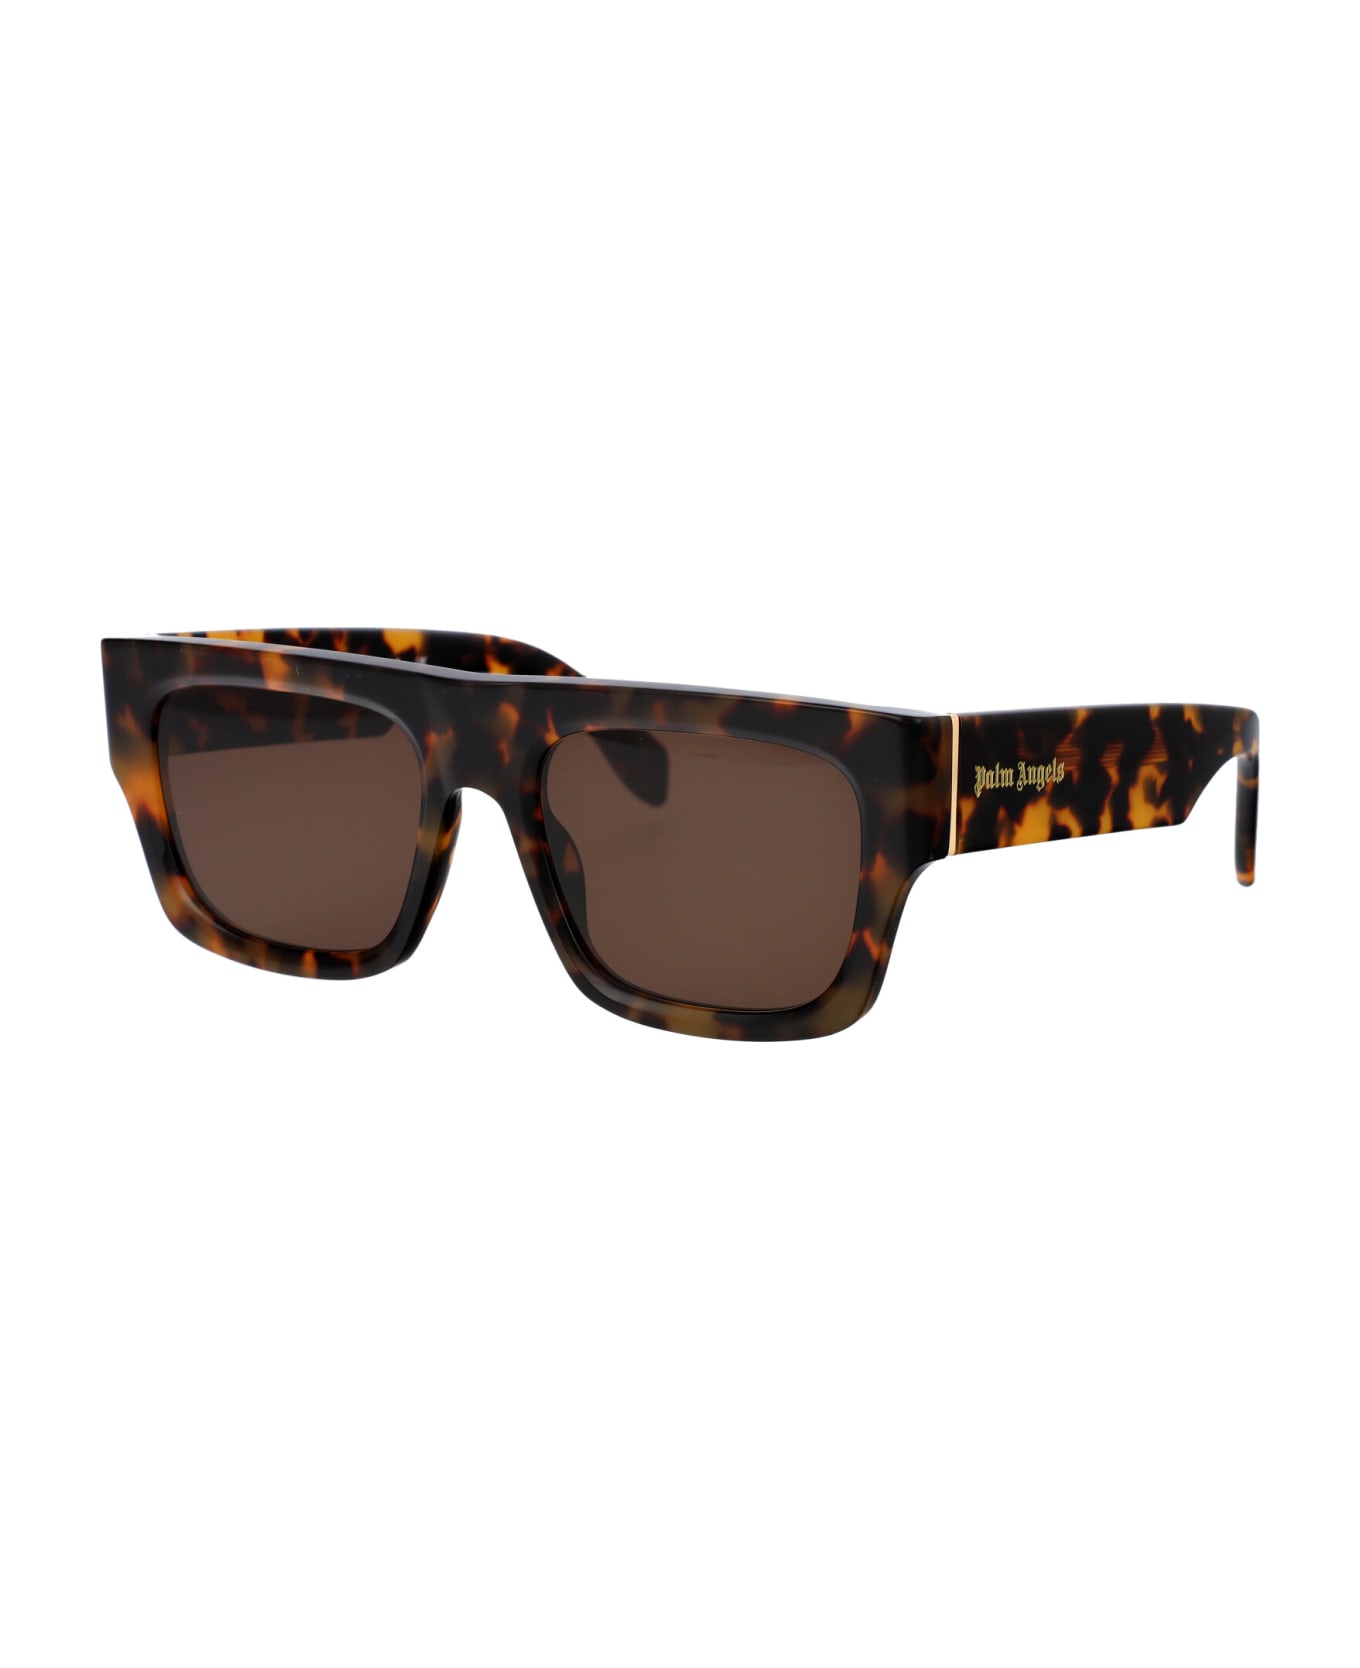 Palm Angels Pixley Sunglasses - 6064 HAVANA